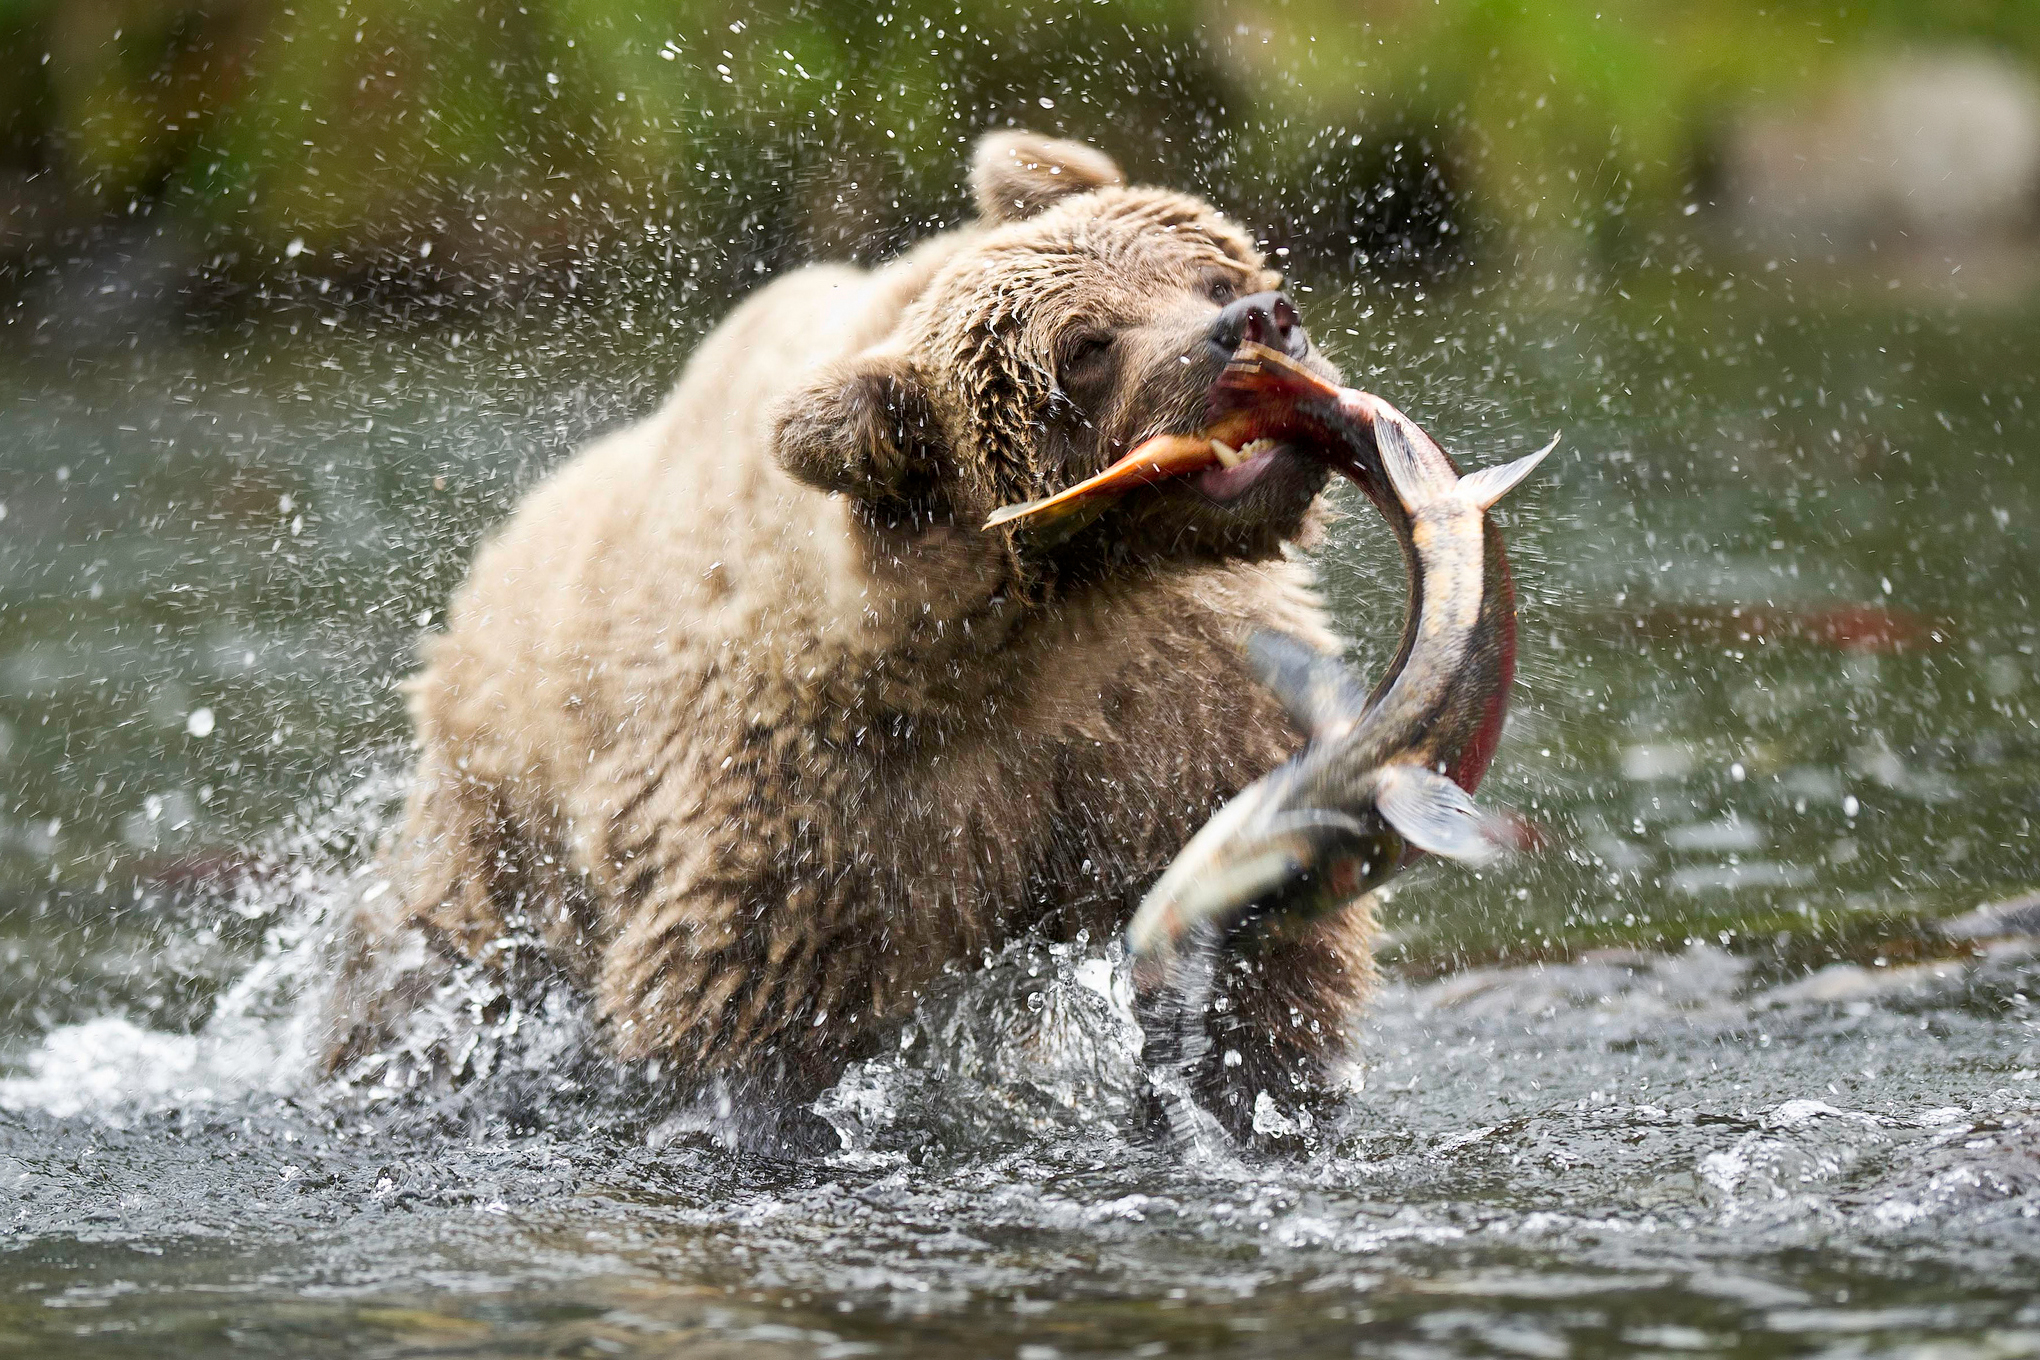 281651 Bild herunterladen tiere, bär, alaska, bären - Hintergrundbilder und Bildschirmschoner kostenlos